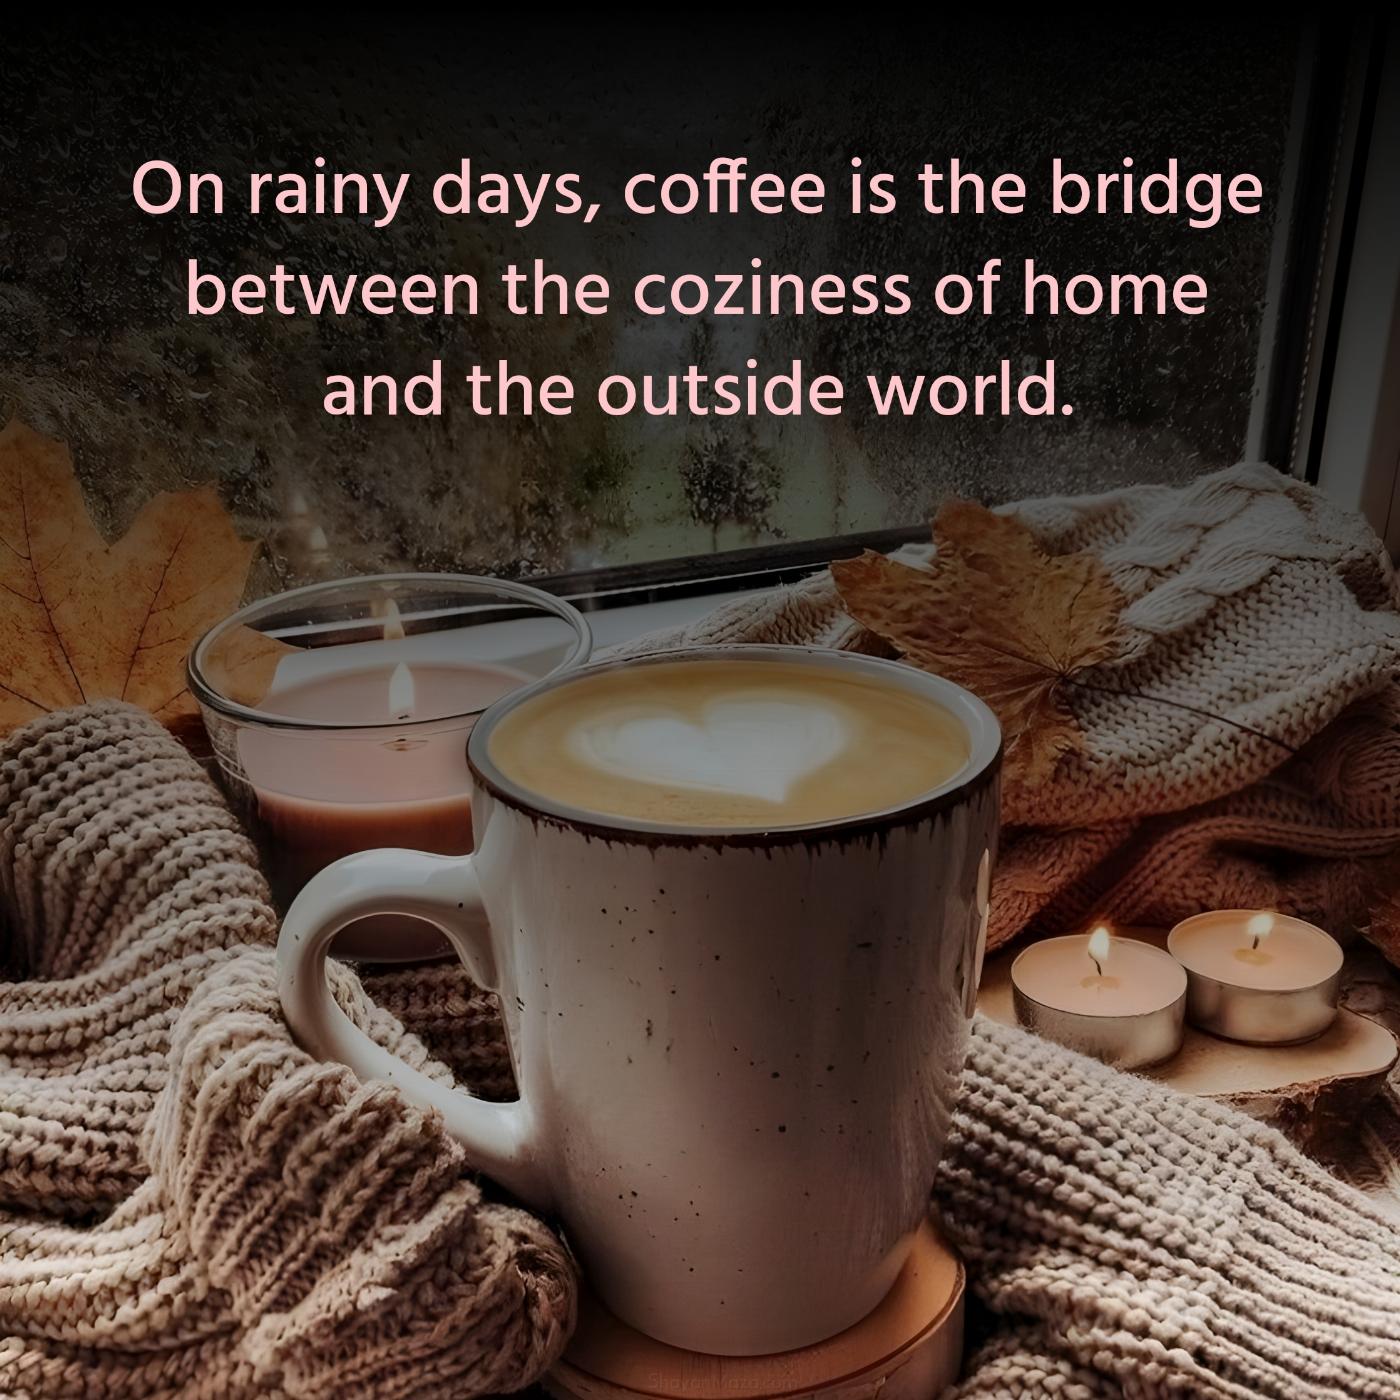 On rainy days coffee is the bridge between the coziness of home